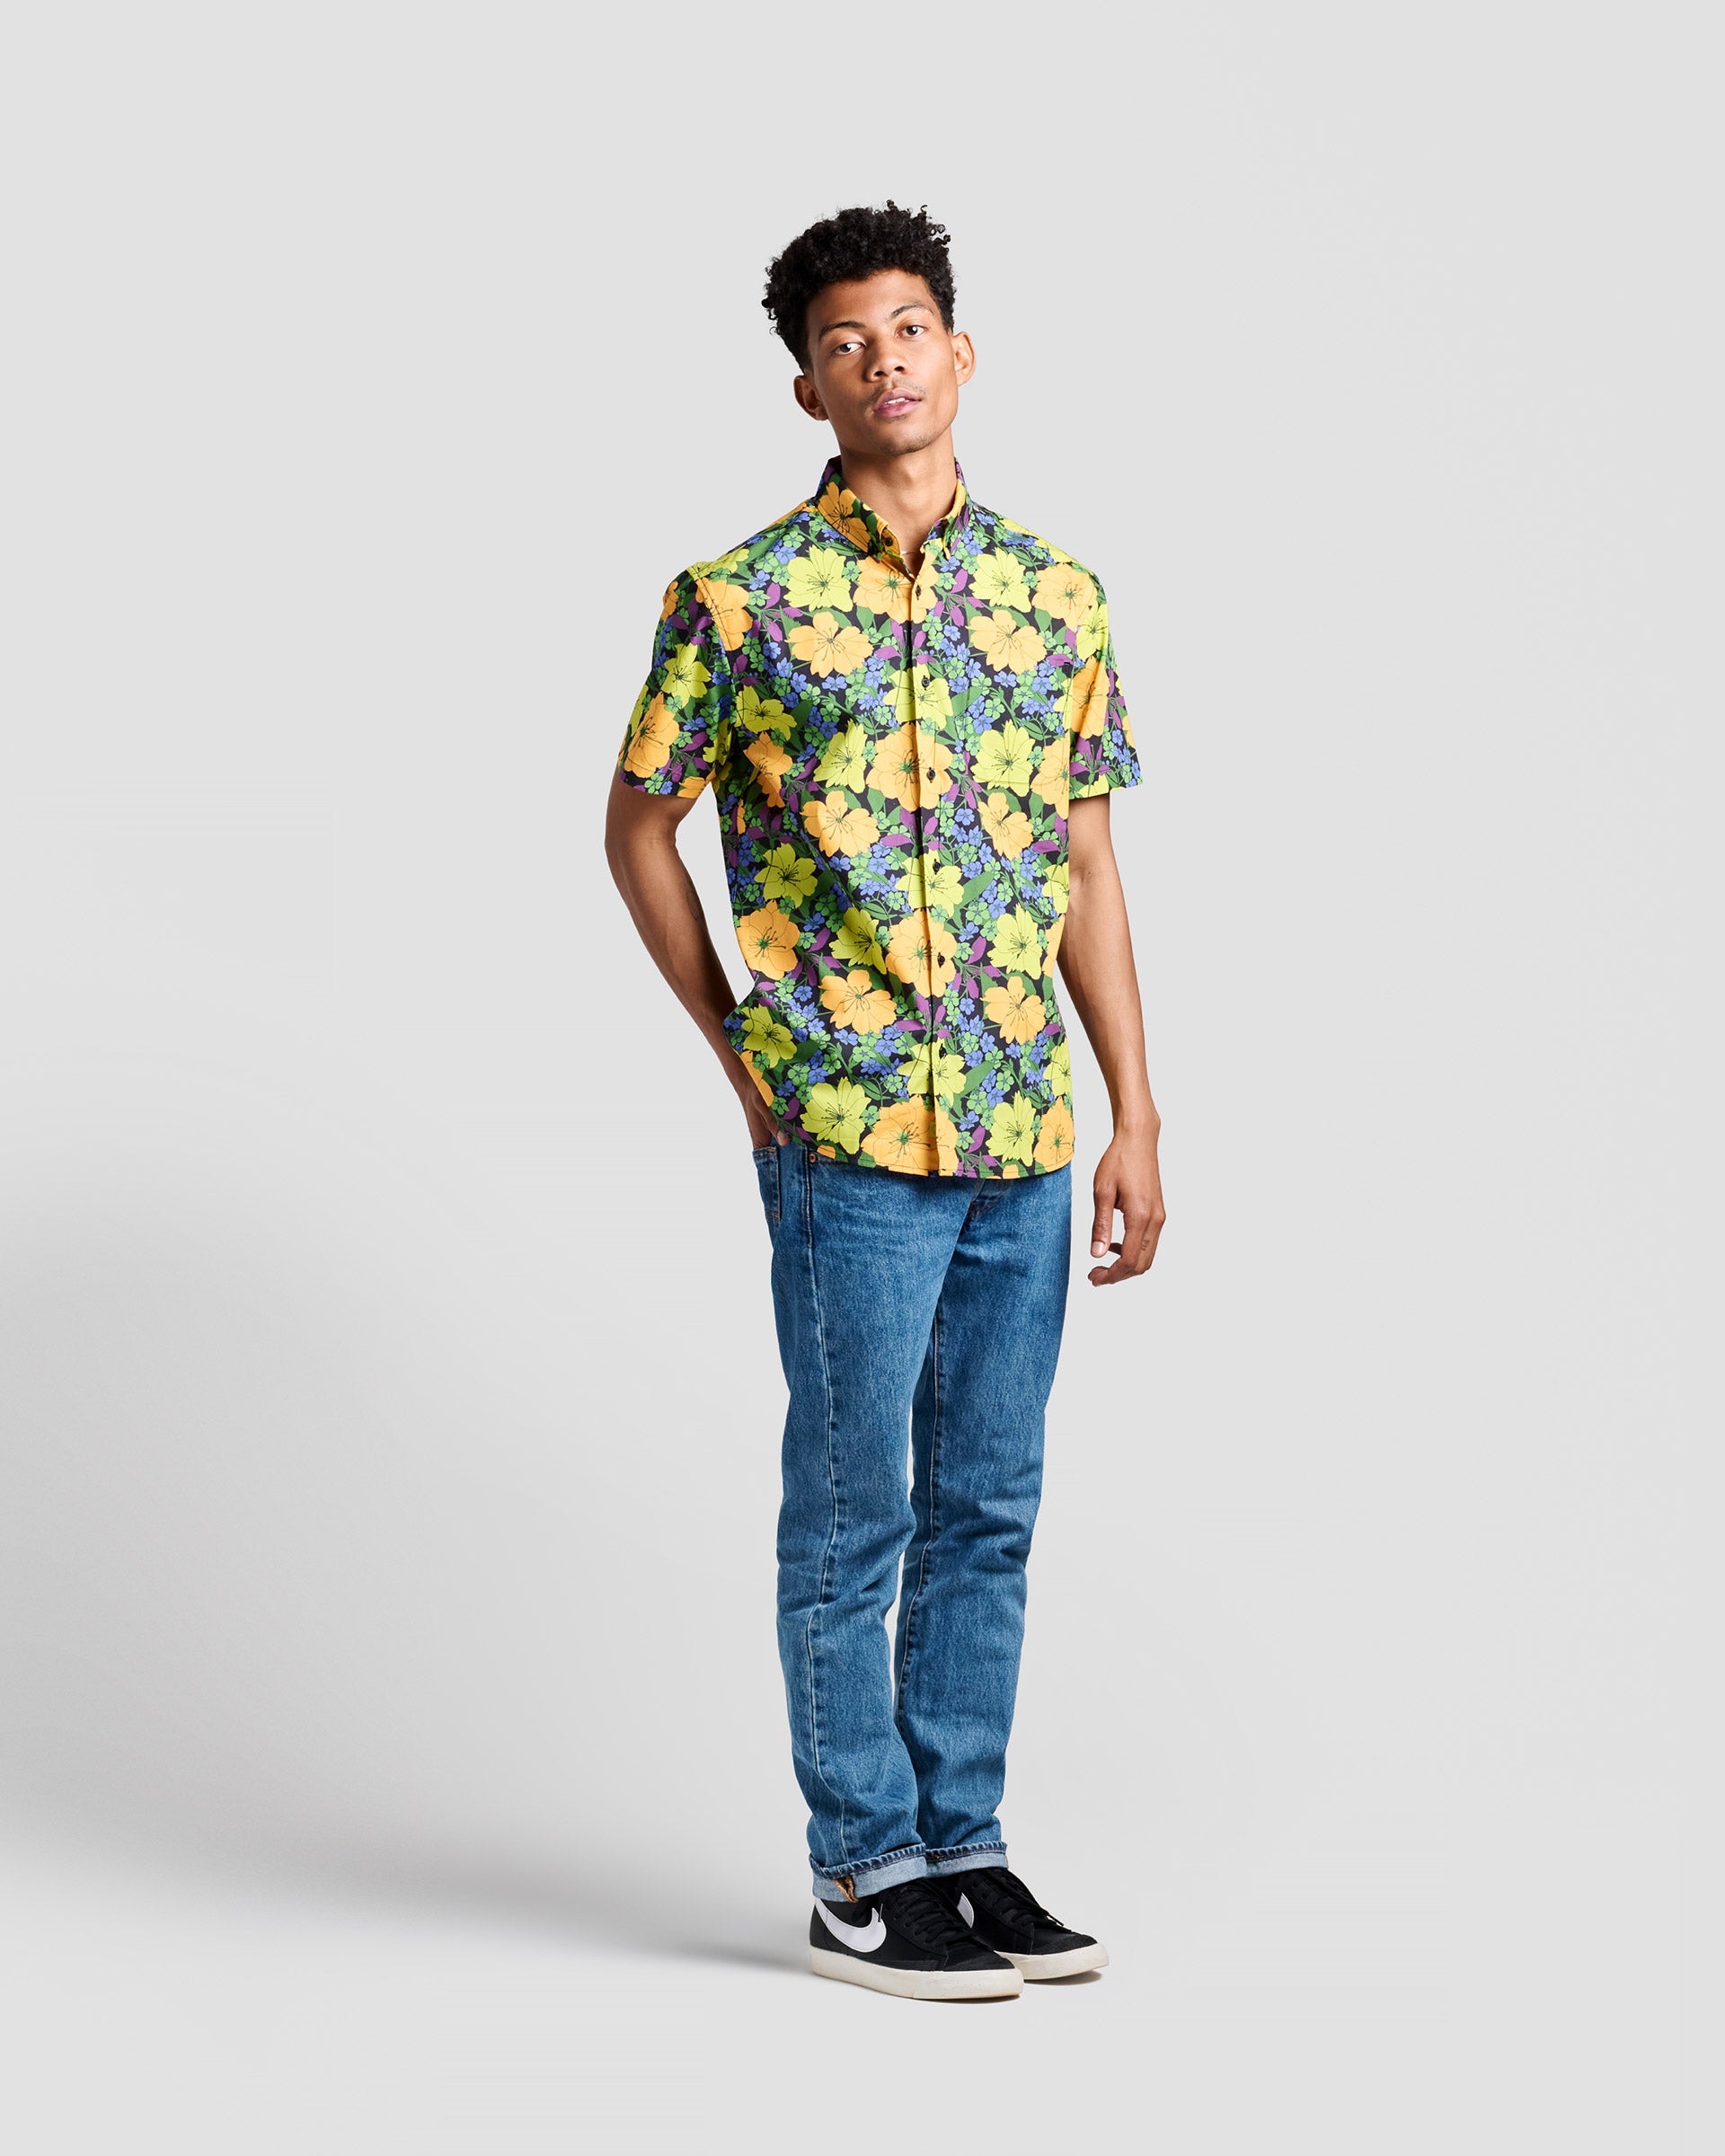 Tropical Floral Print Shirt > Casual Shirt > Button Up Shirt